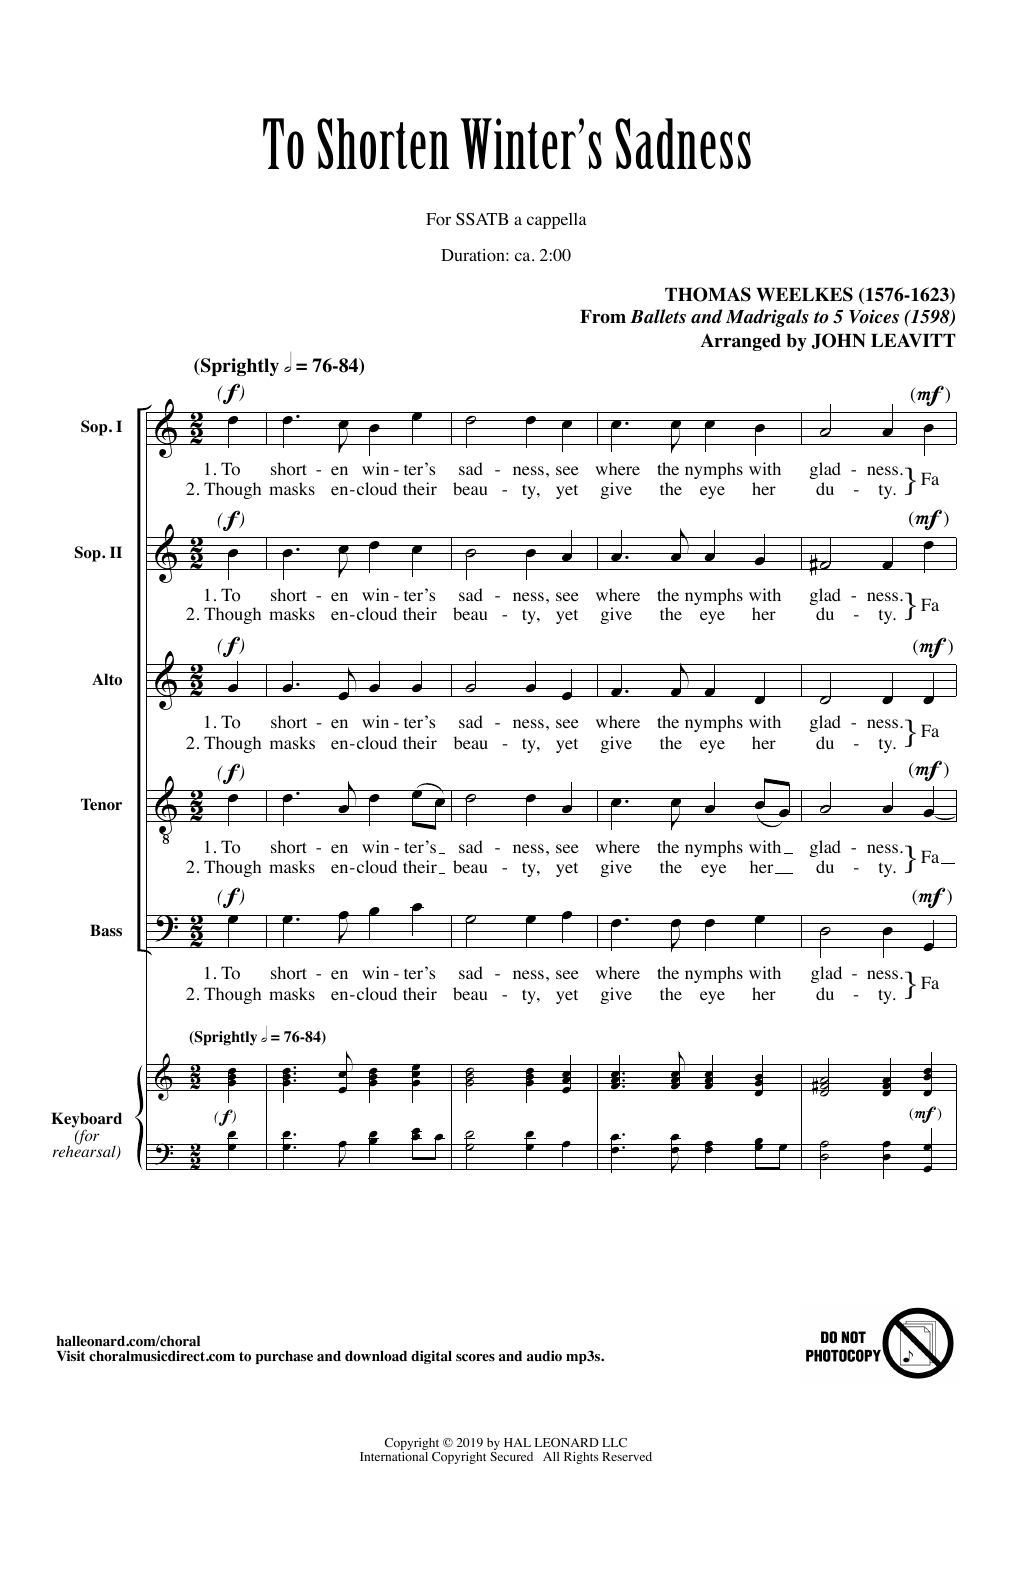 Thomas Weelkes To Shorten Winter's Sadness (arr. John Leavitt) sheet music notes and chords arranged for SATB Choir